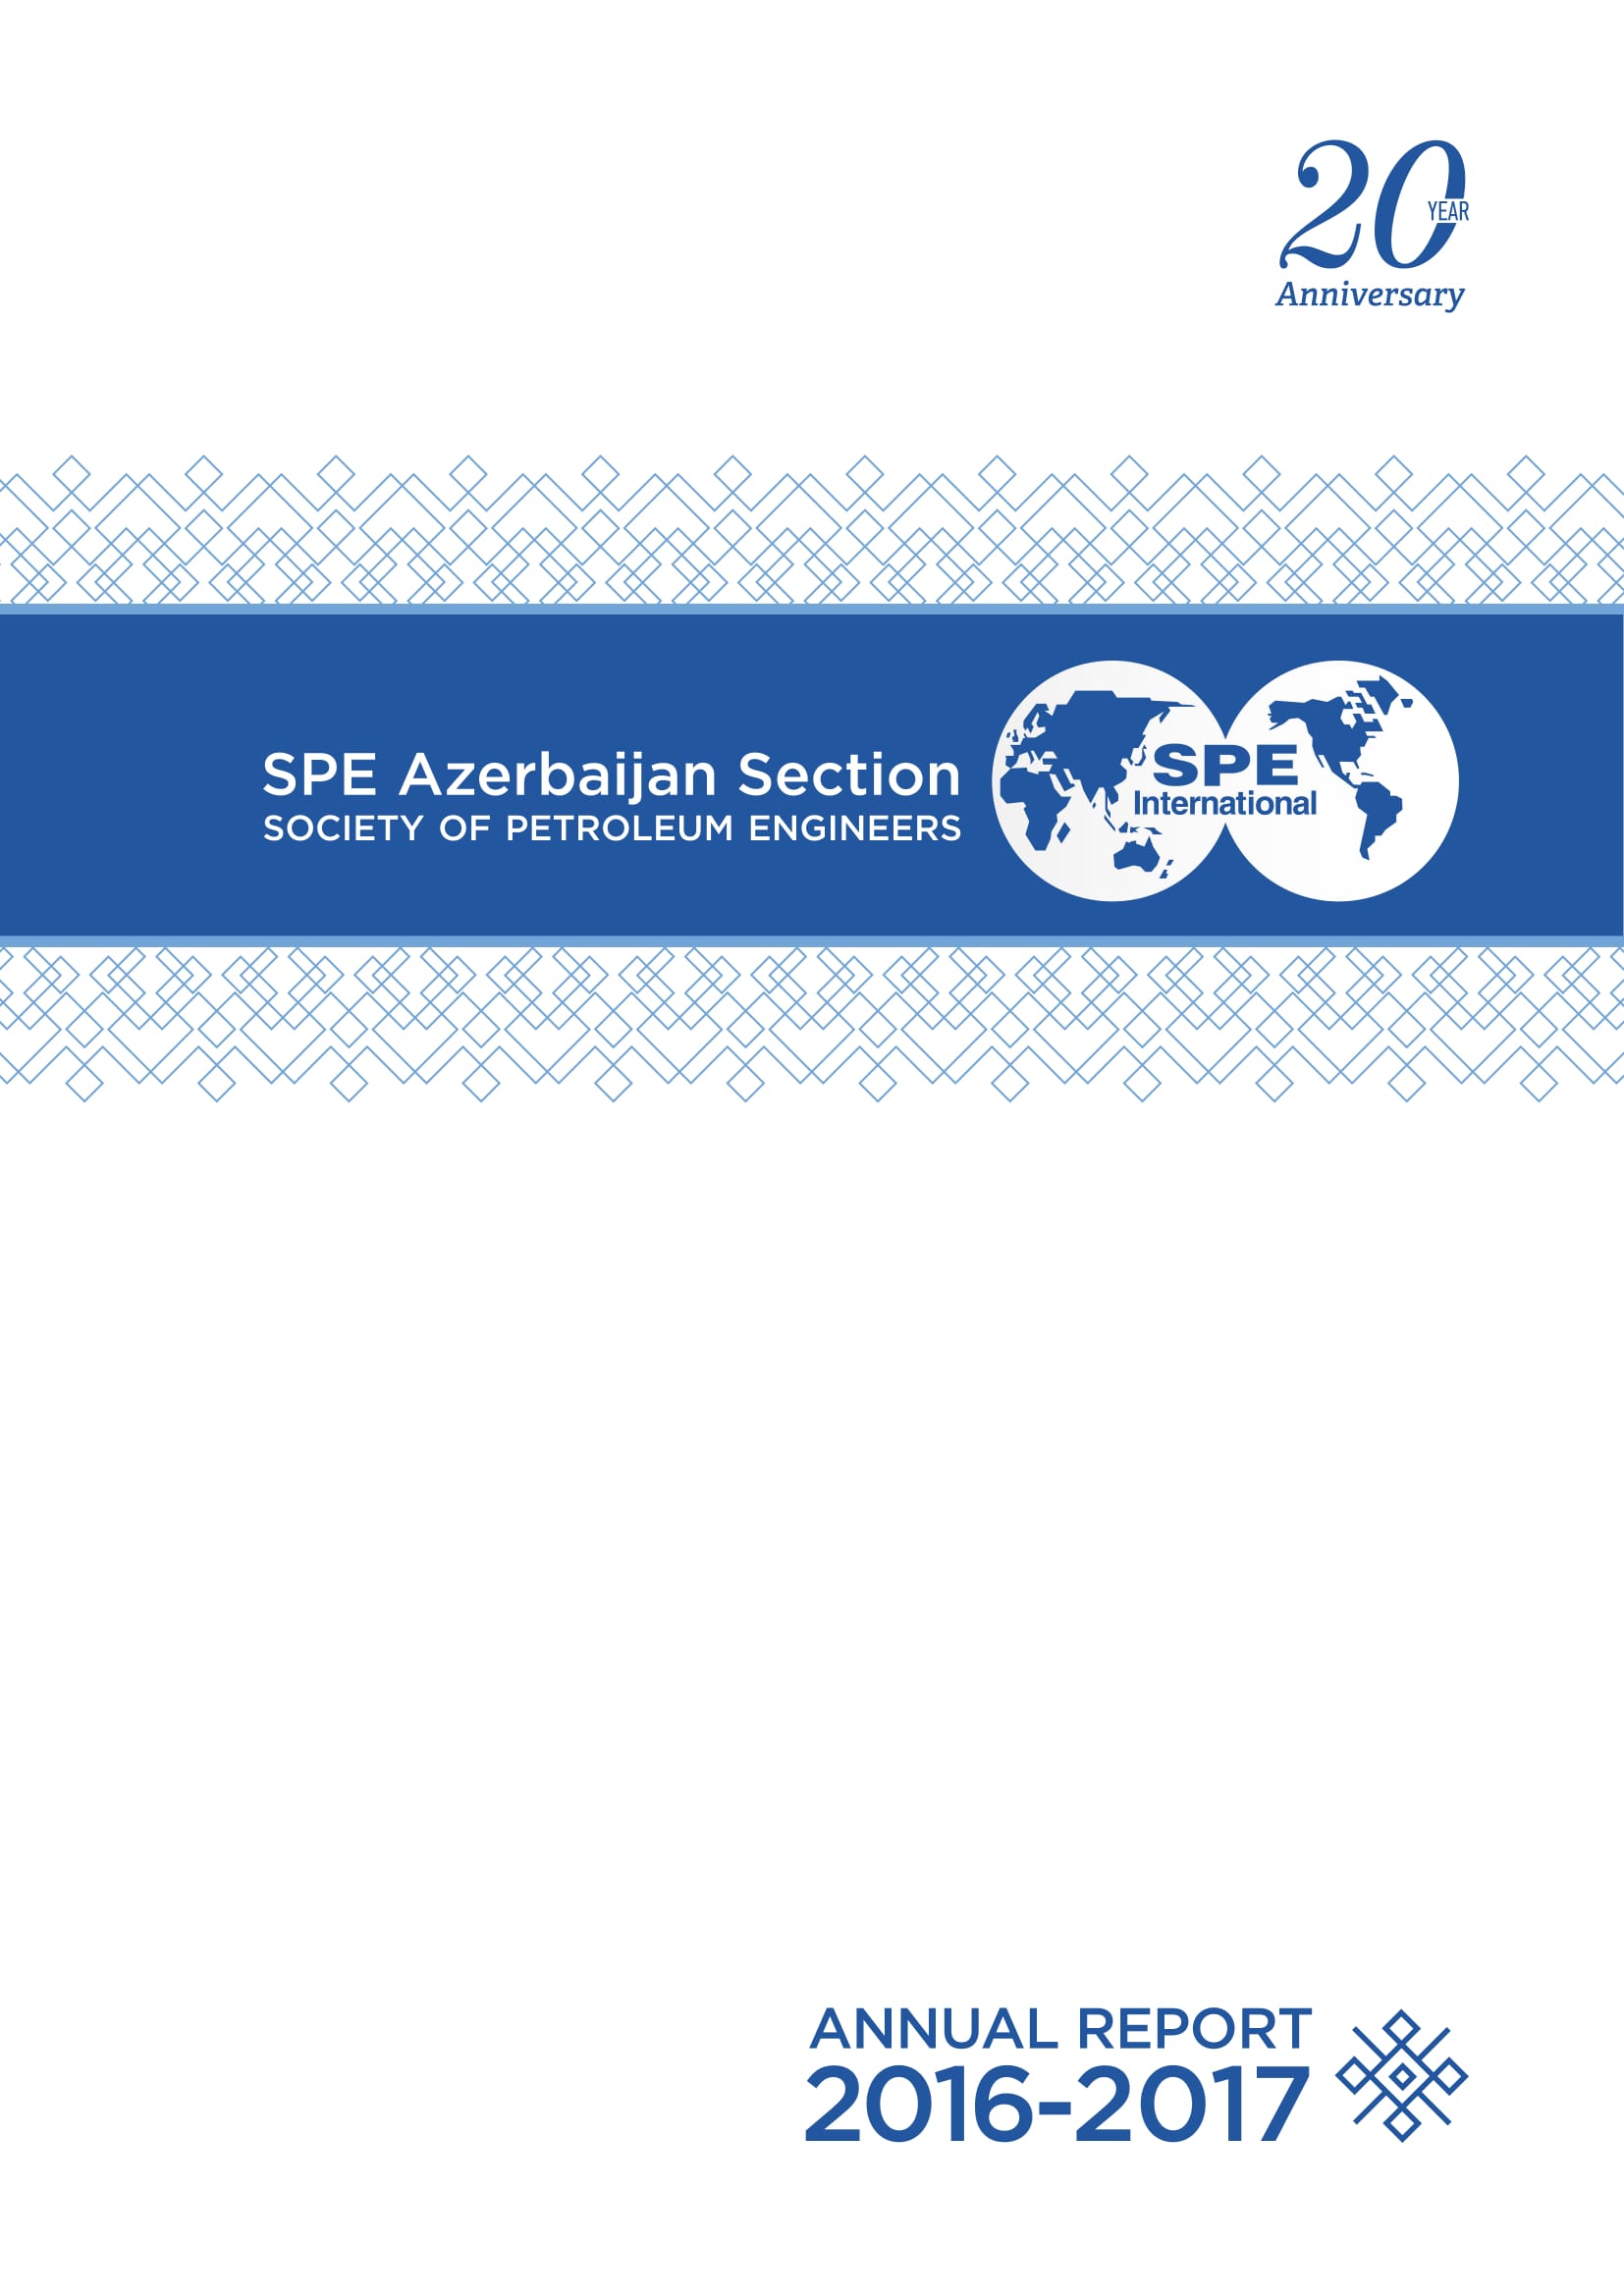 SPE Azerbaijan Annual Report 2017